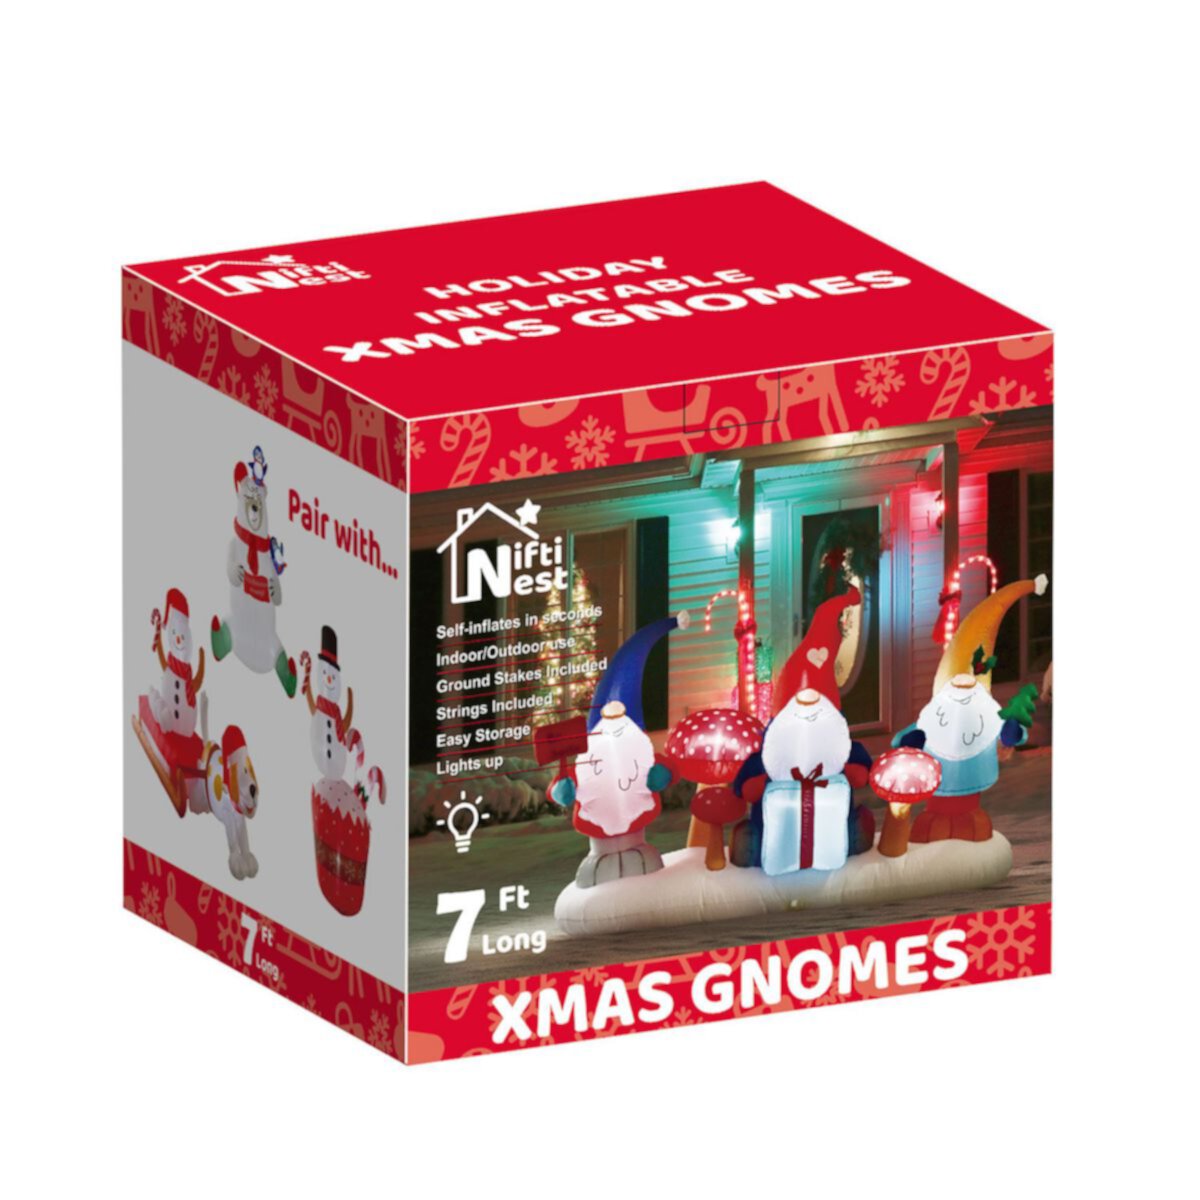 4' Ft Xmas Gnomes Holiday Inflatable Popfun